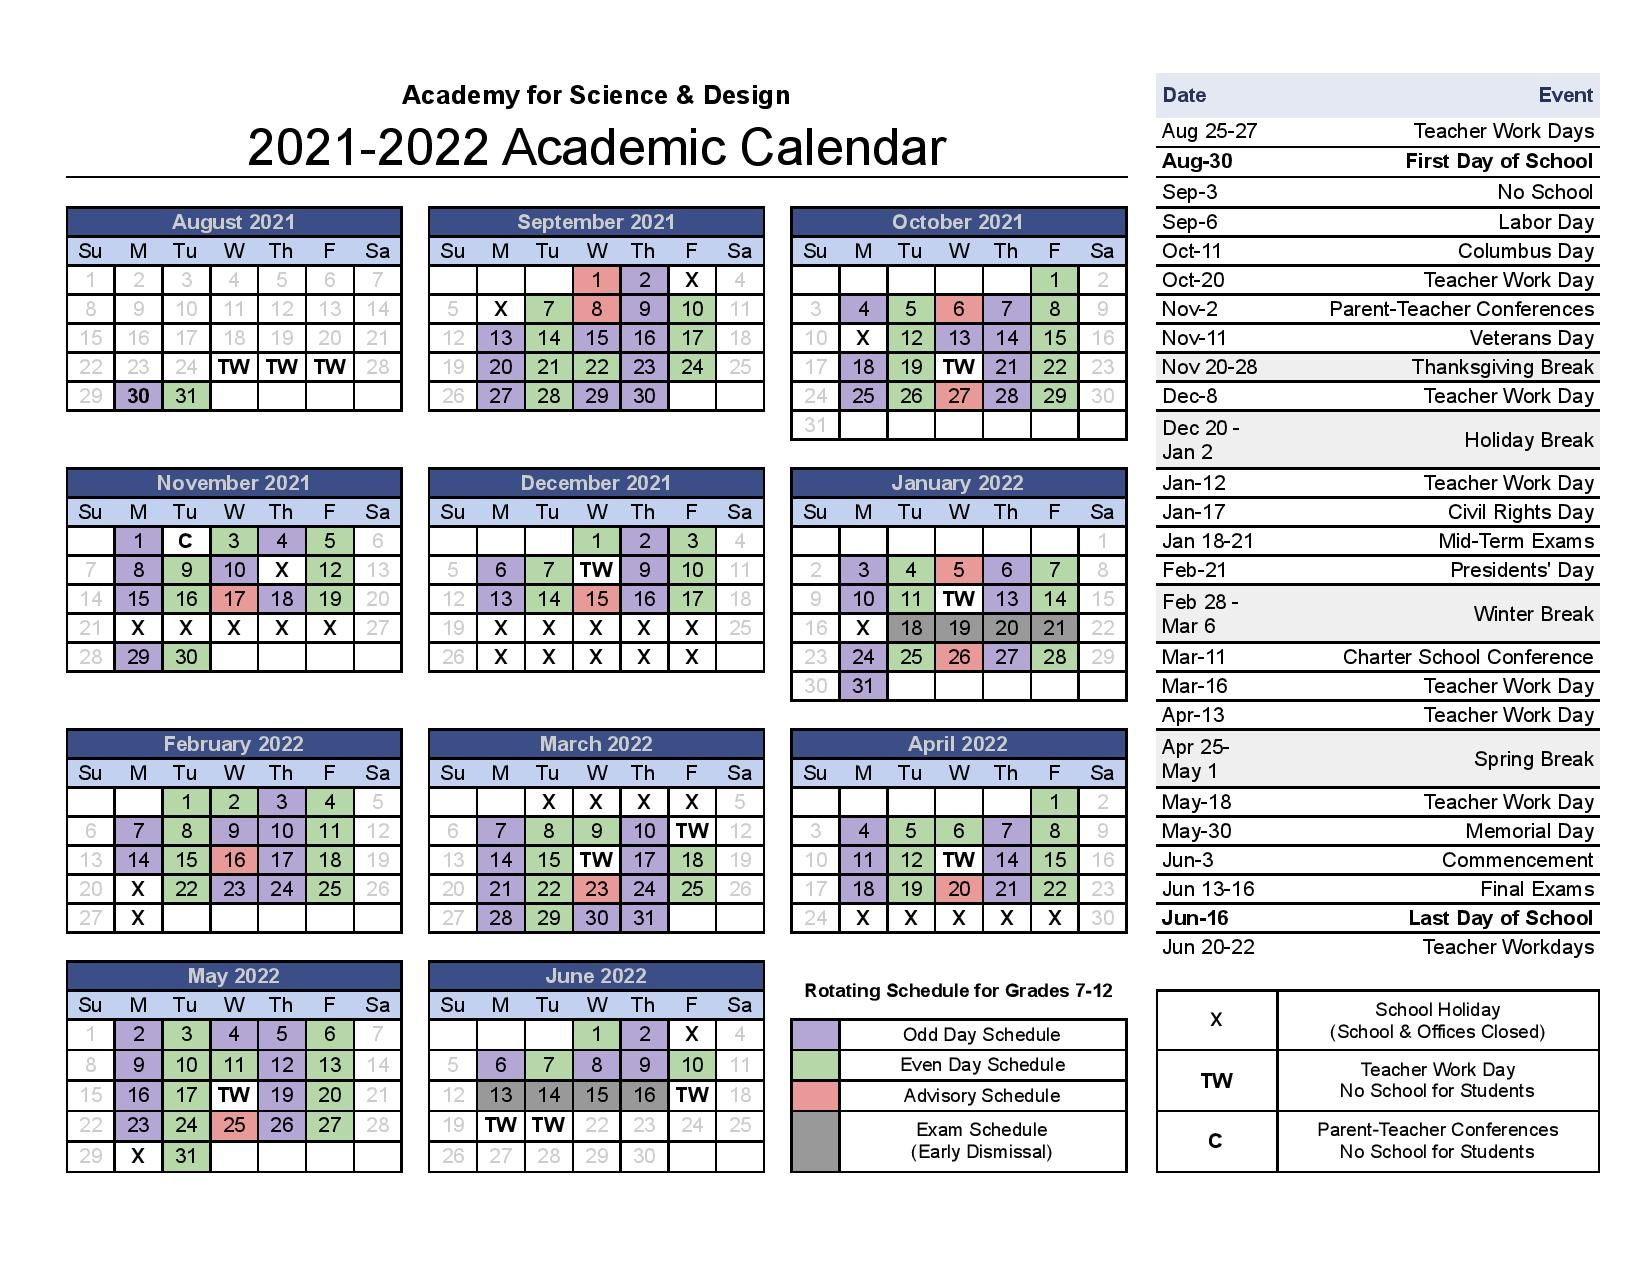 Last Day Of The Mayan Calendar 2022